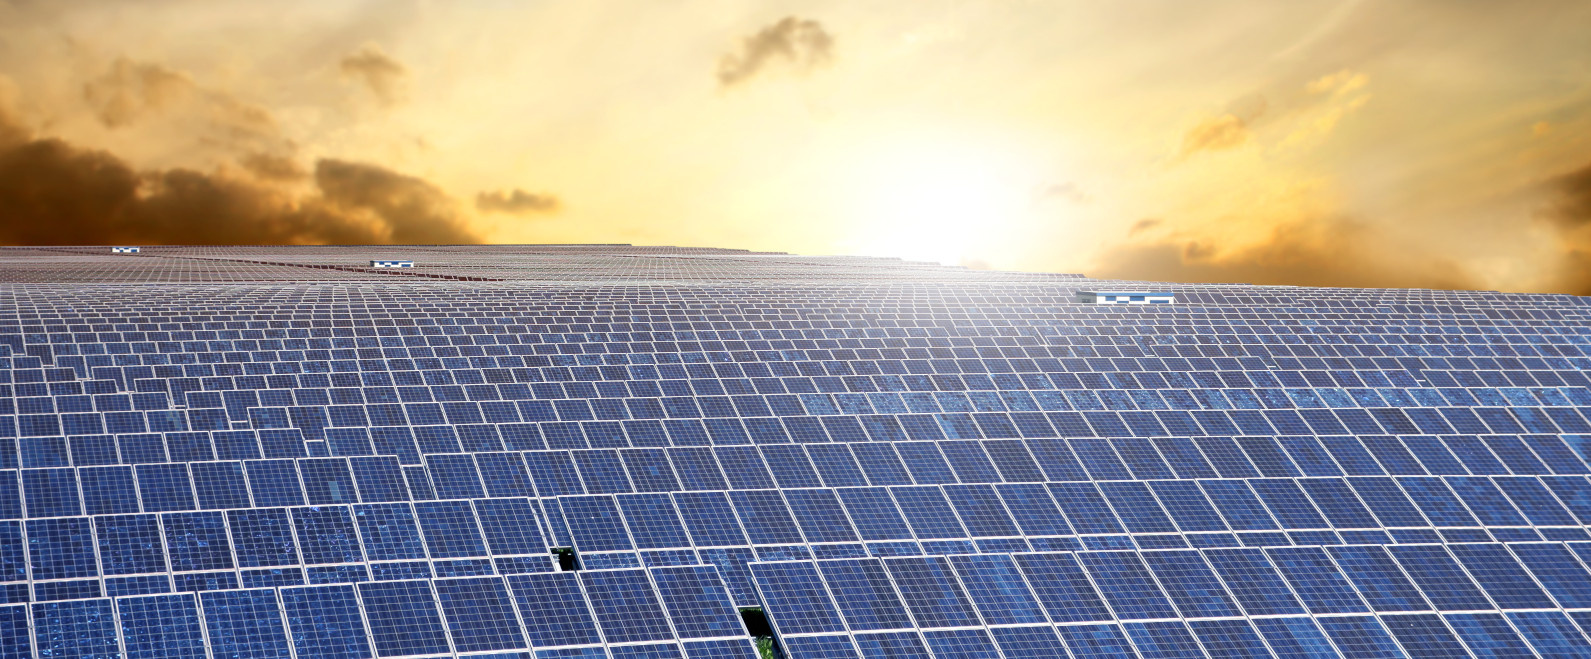   Kędzierzyn-based Grupa Azoty Group company launches its own solar PV system